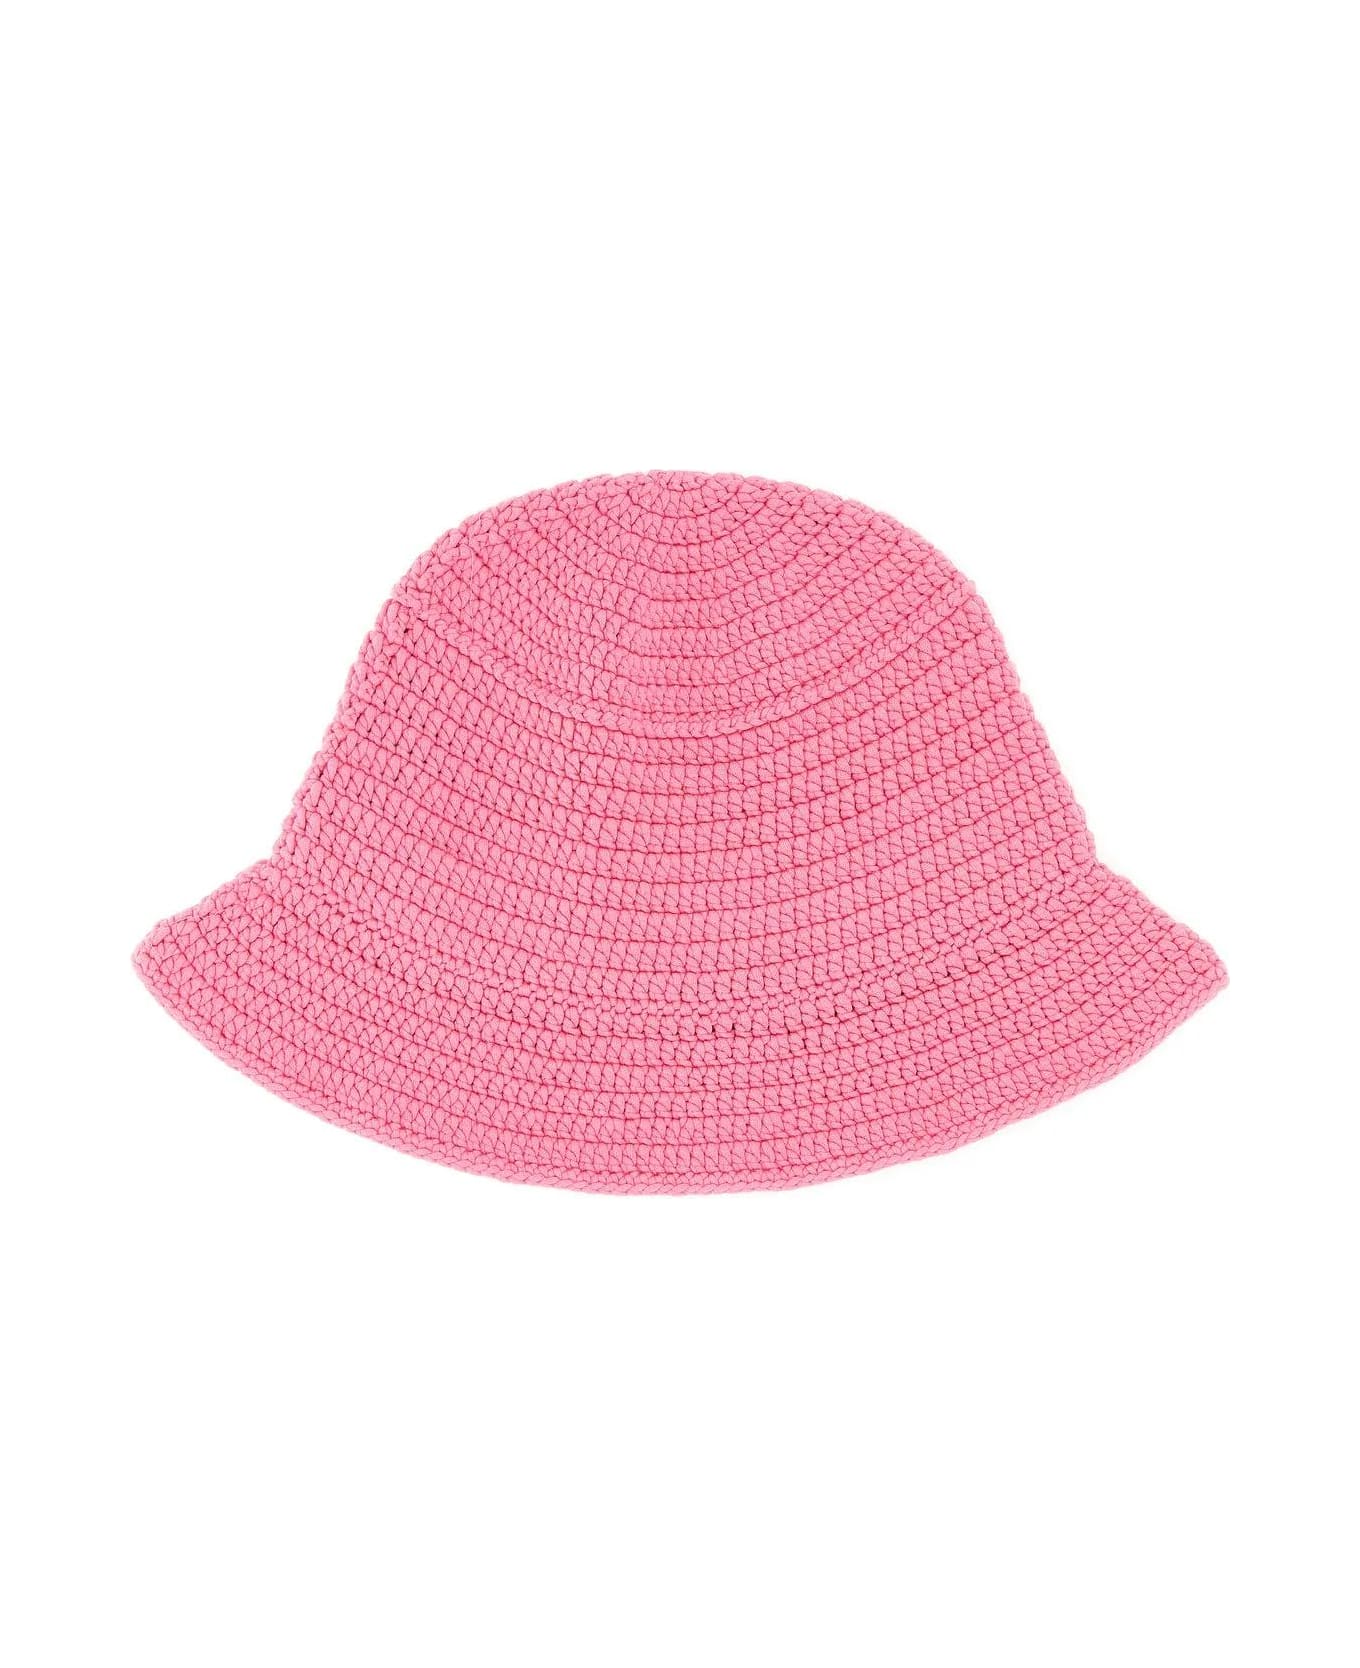 Burberry Pink Crochet Bucket Hat - Pink 帽子